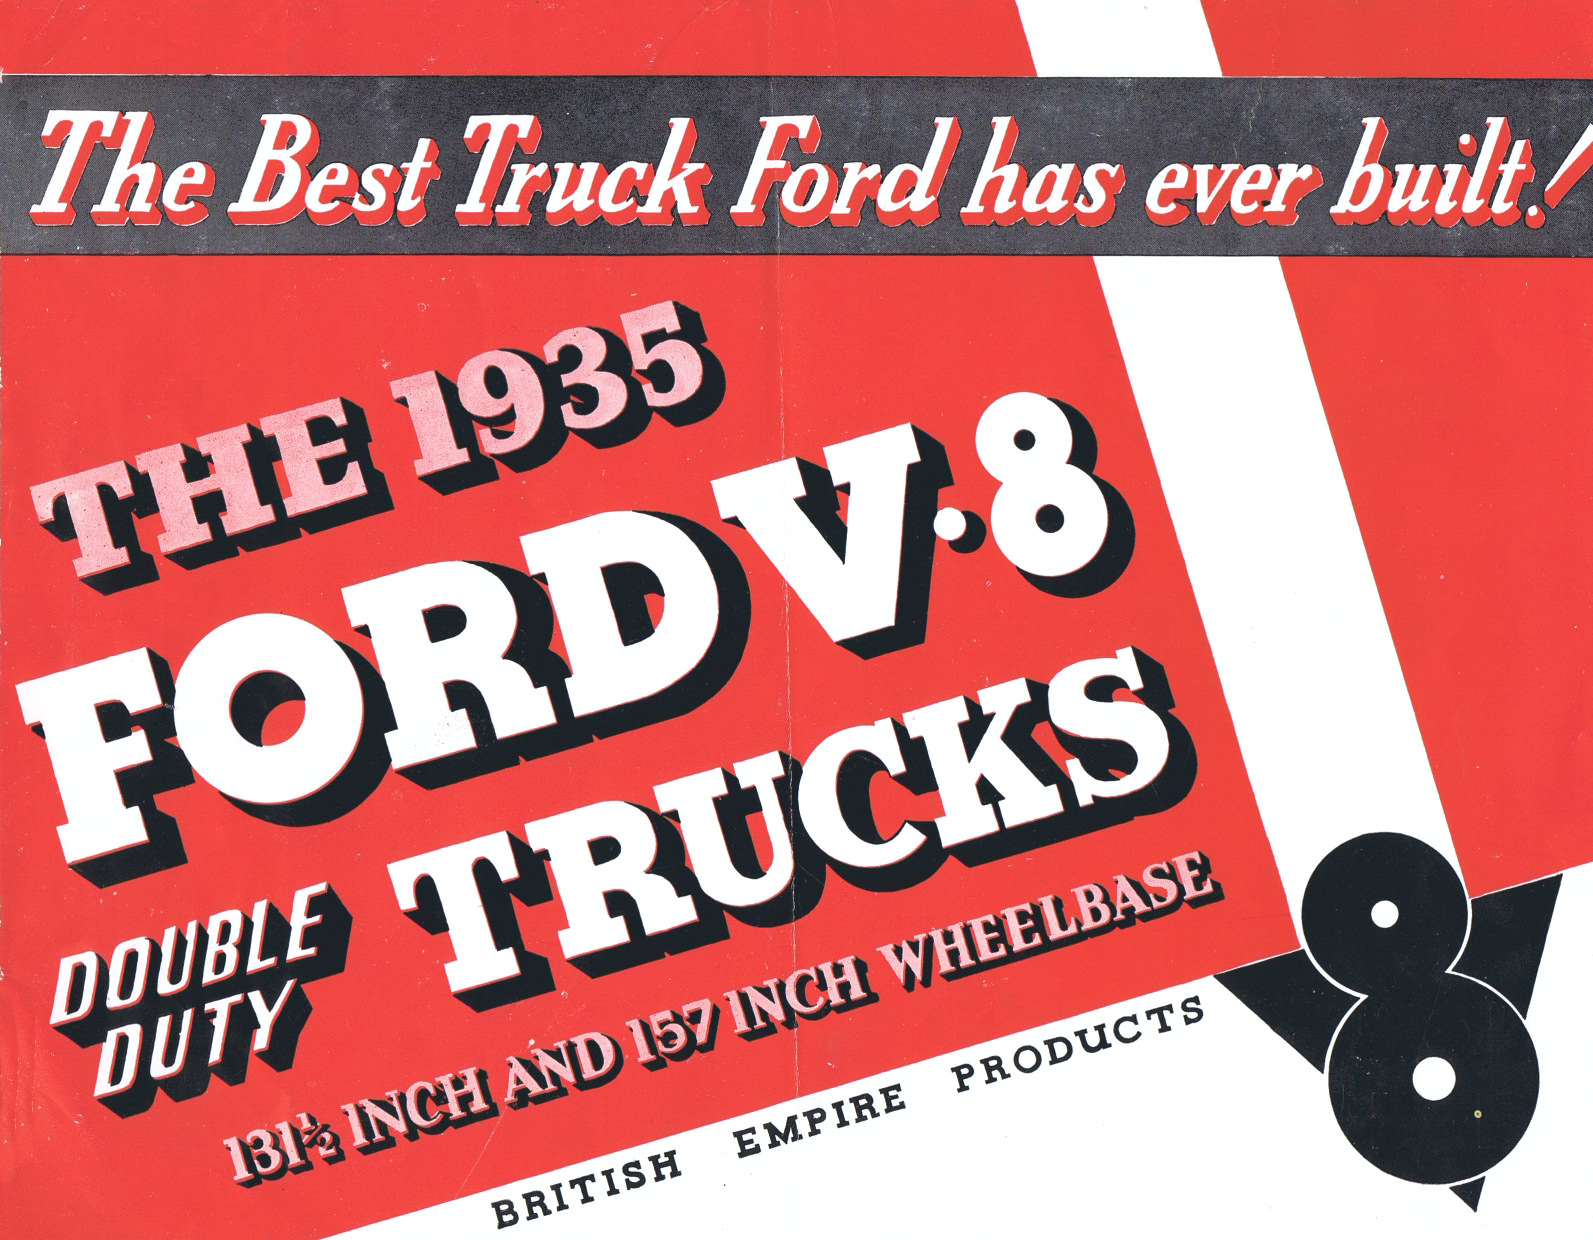 1935_Ford_Double_Duty_Trucks_Foldout_Aus-01